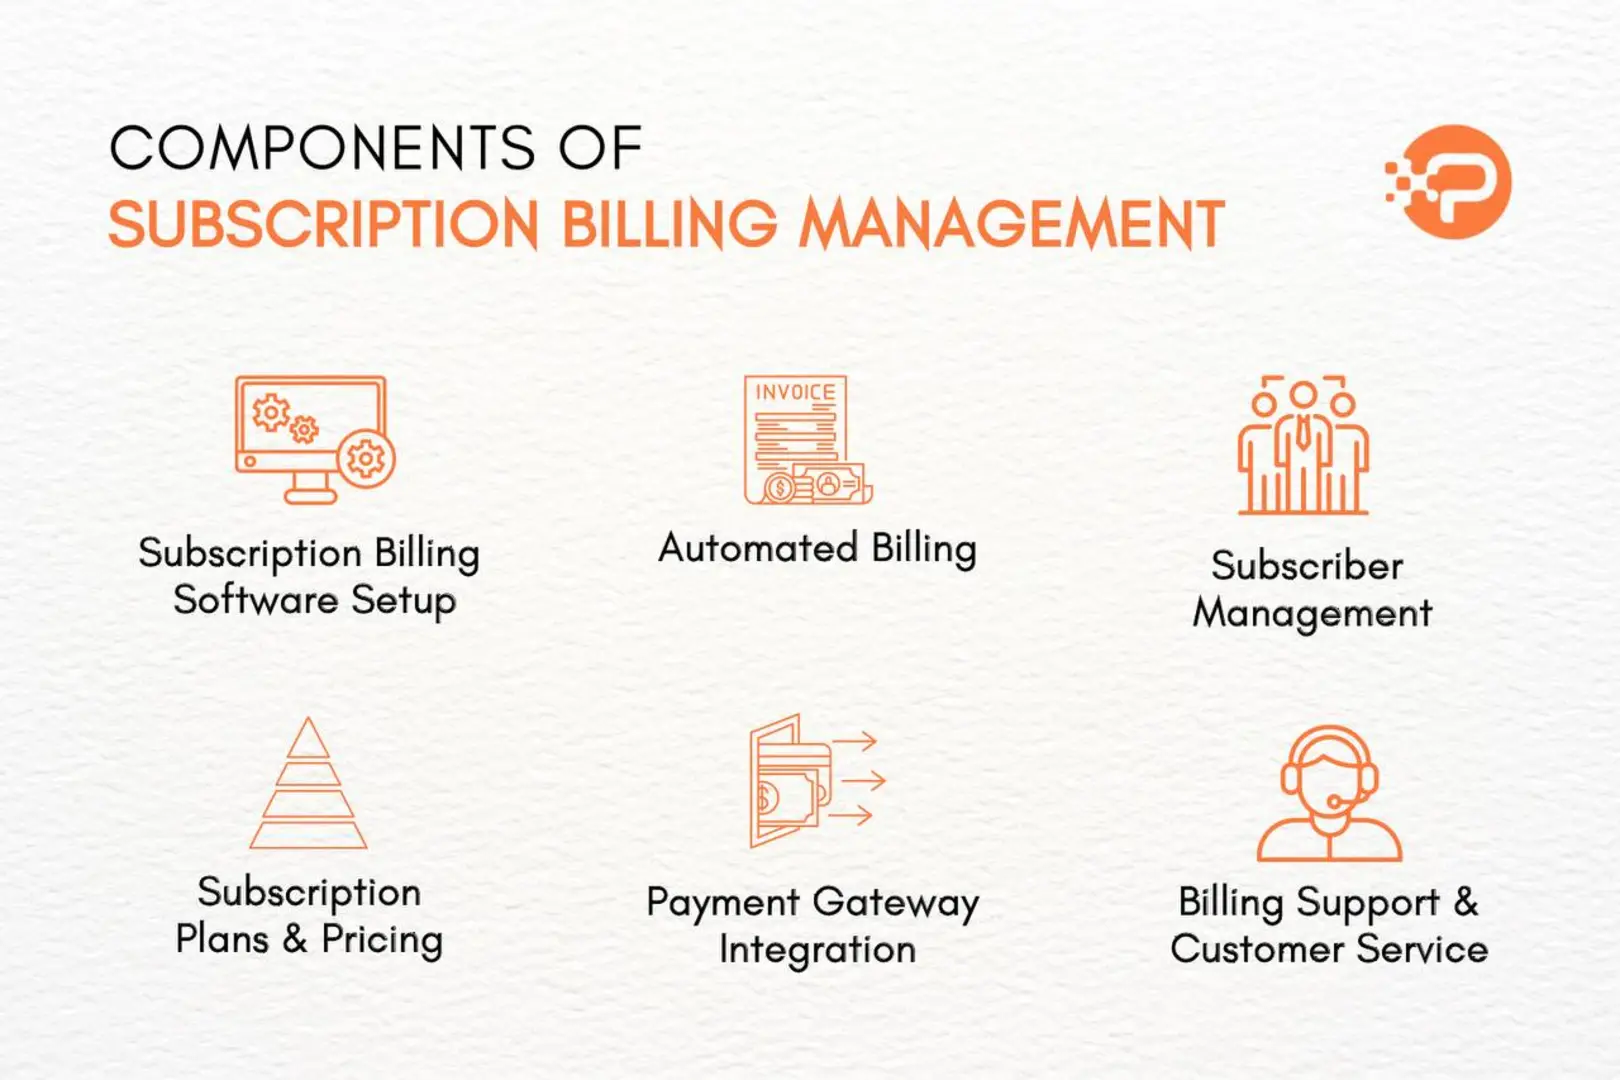 Components of Subscription Billing Management